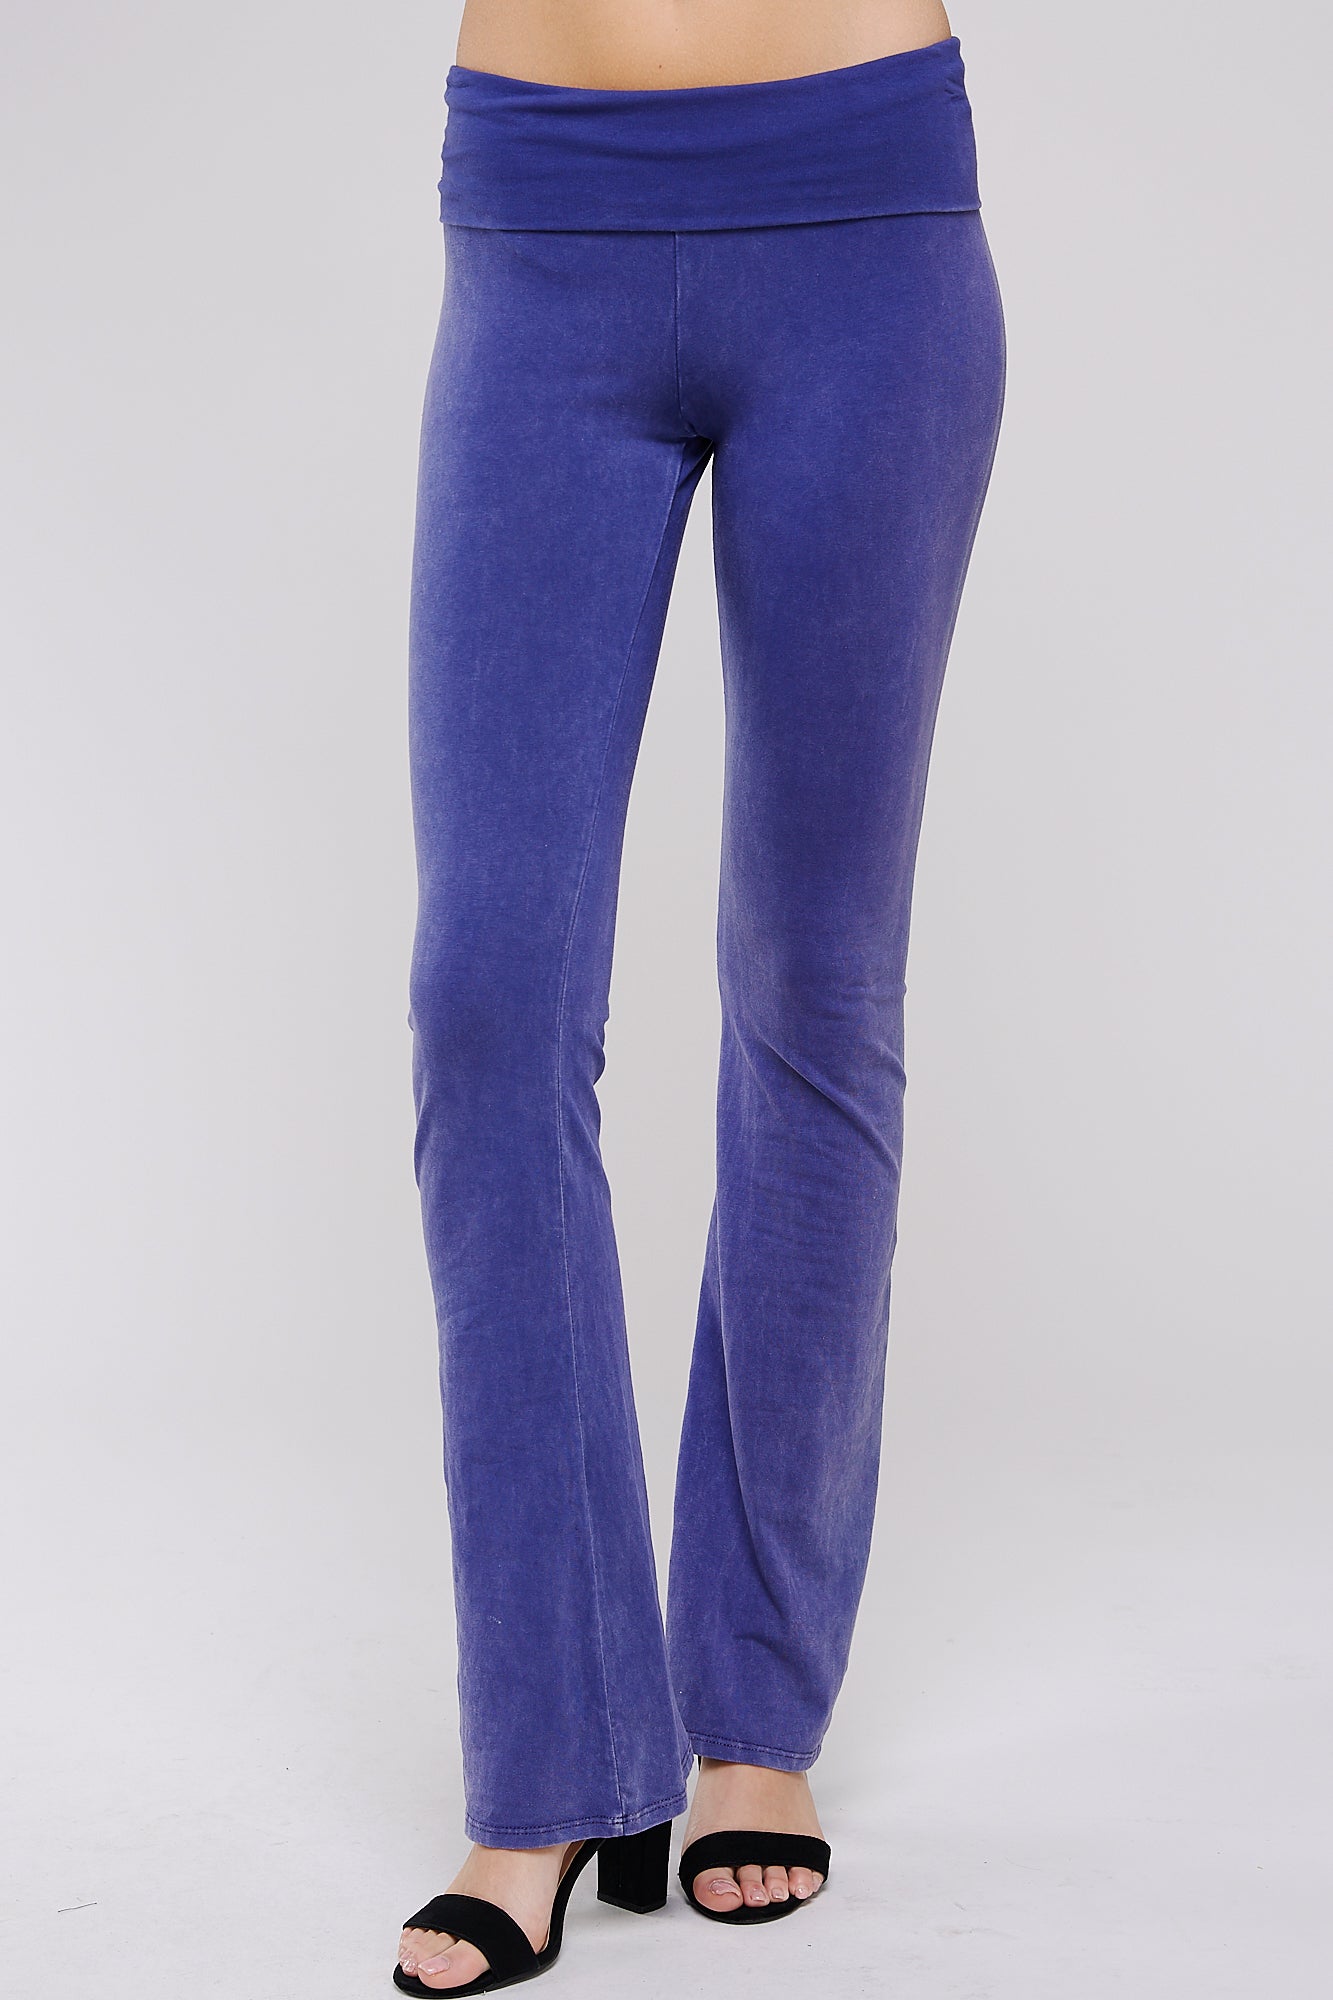 Mineral Wash Yoga Pants - Women's Casual Fold Over Waistband Flared Leg